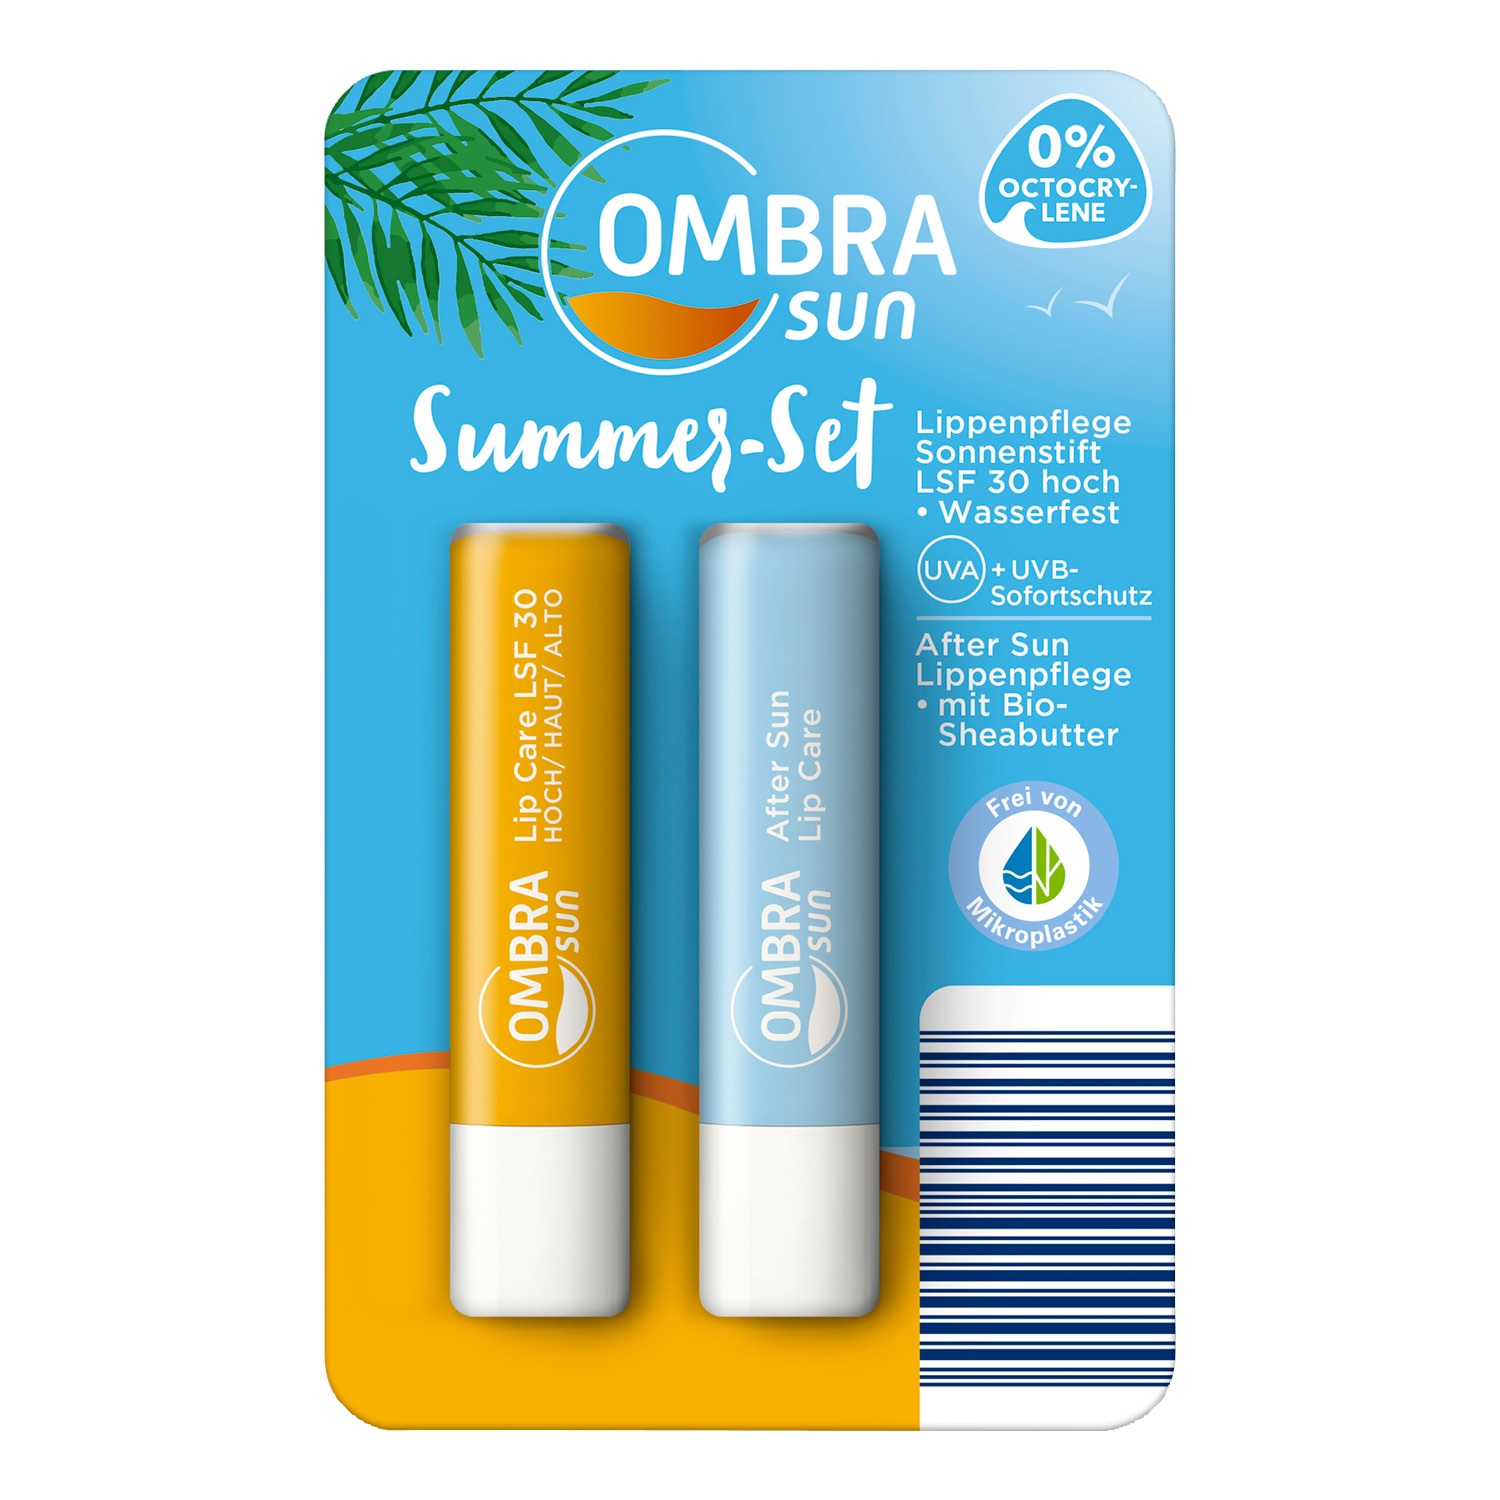 OMBRA sun Lippenpflege Summer-Set 9,6 g